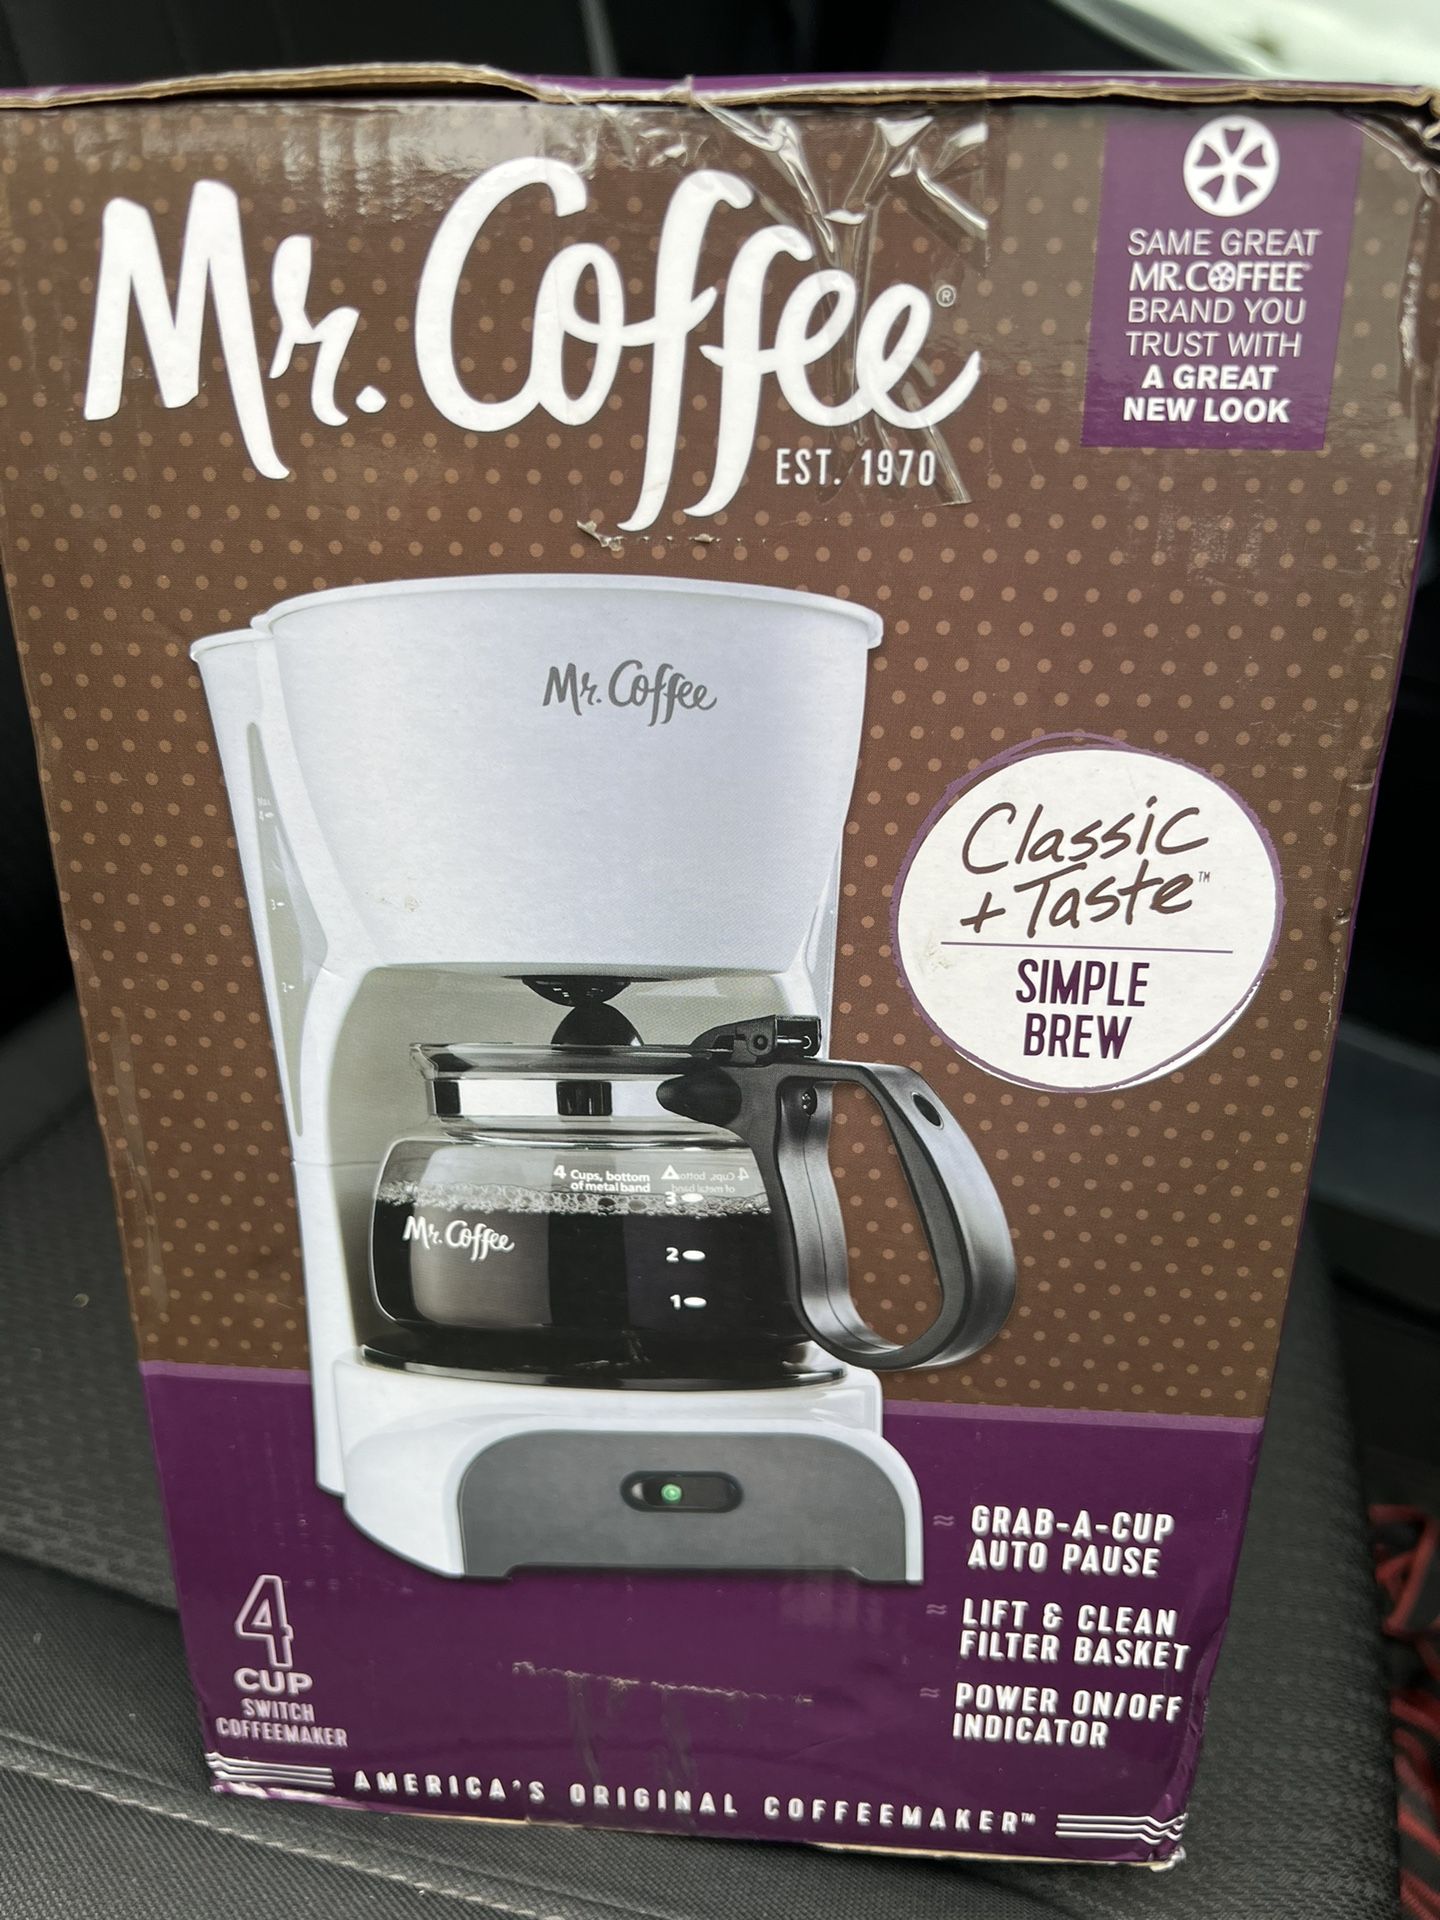 Mr. coffee